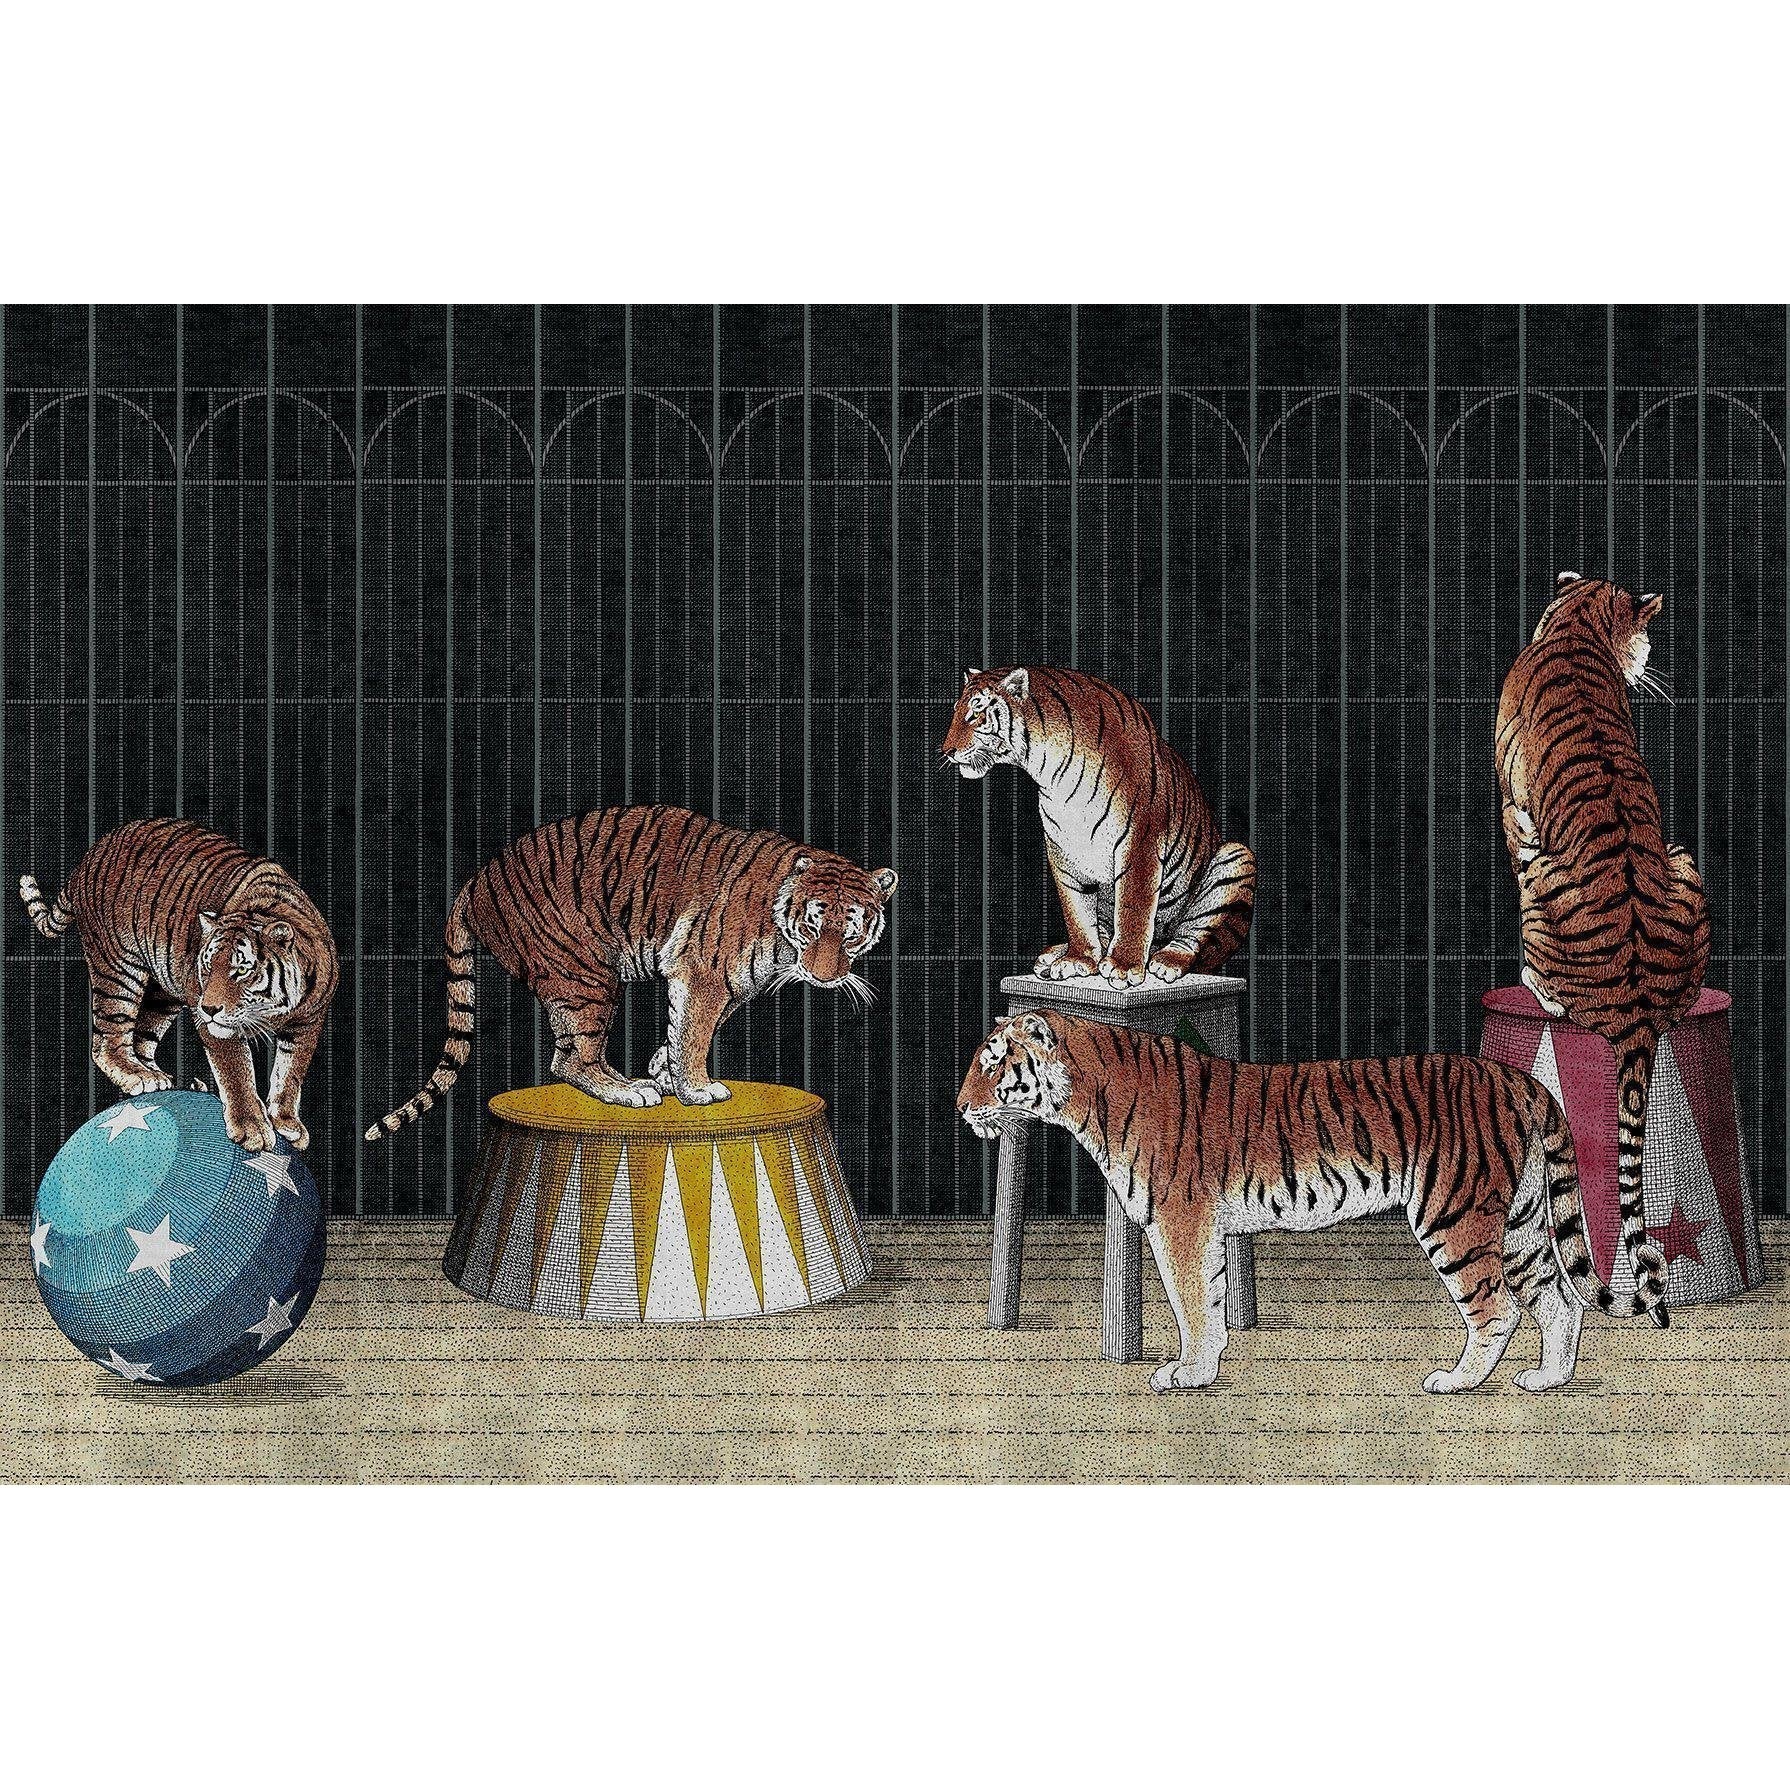 Tigers-Digital Wallpaper-London Art-Orange 2-19004-02